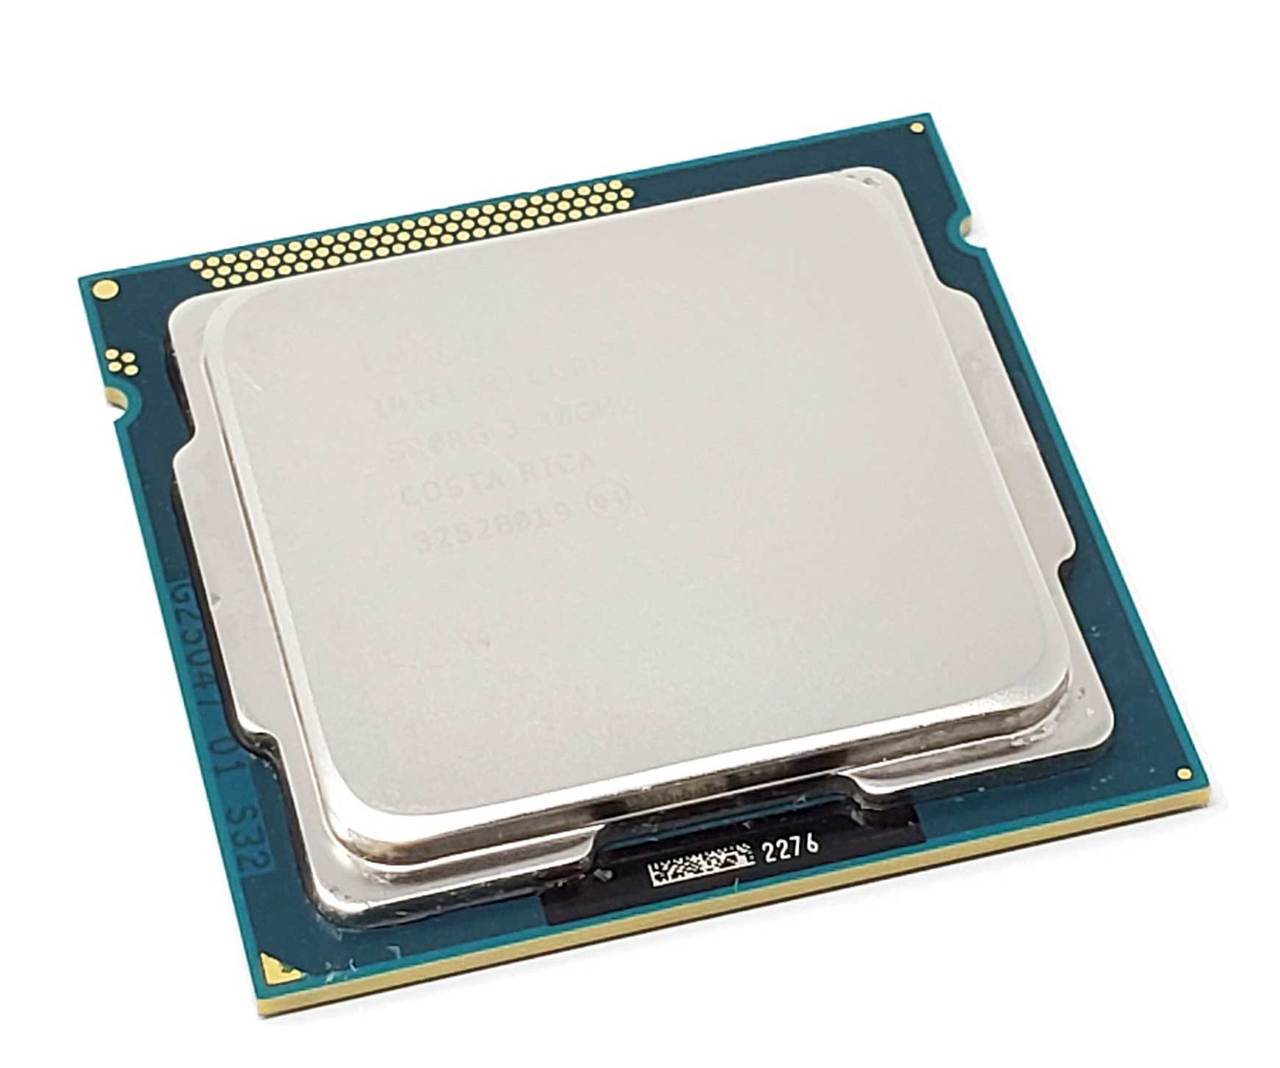 Intel Core i3 N305 @ 2693.41 MHz - CPU-Z VALIDATOR